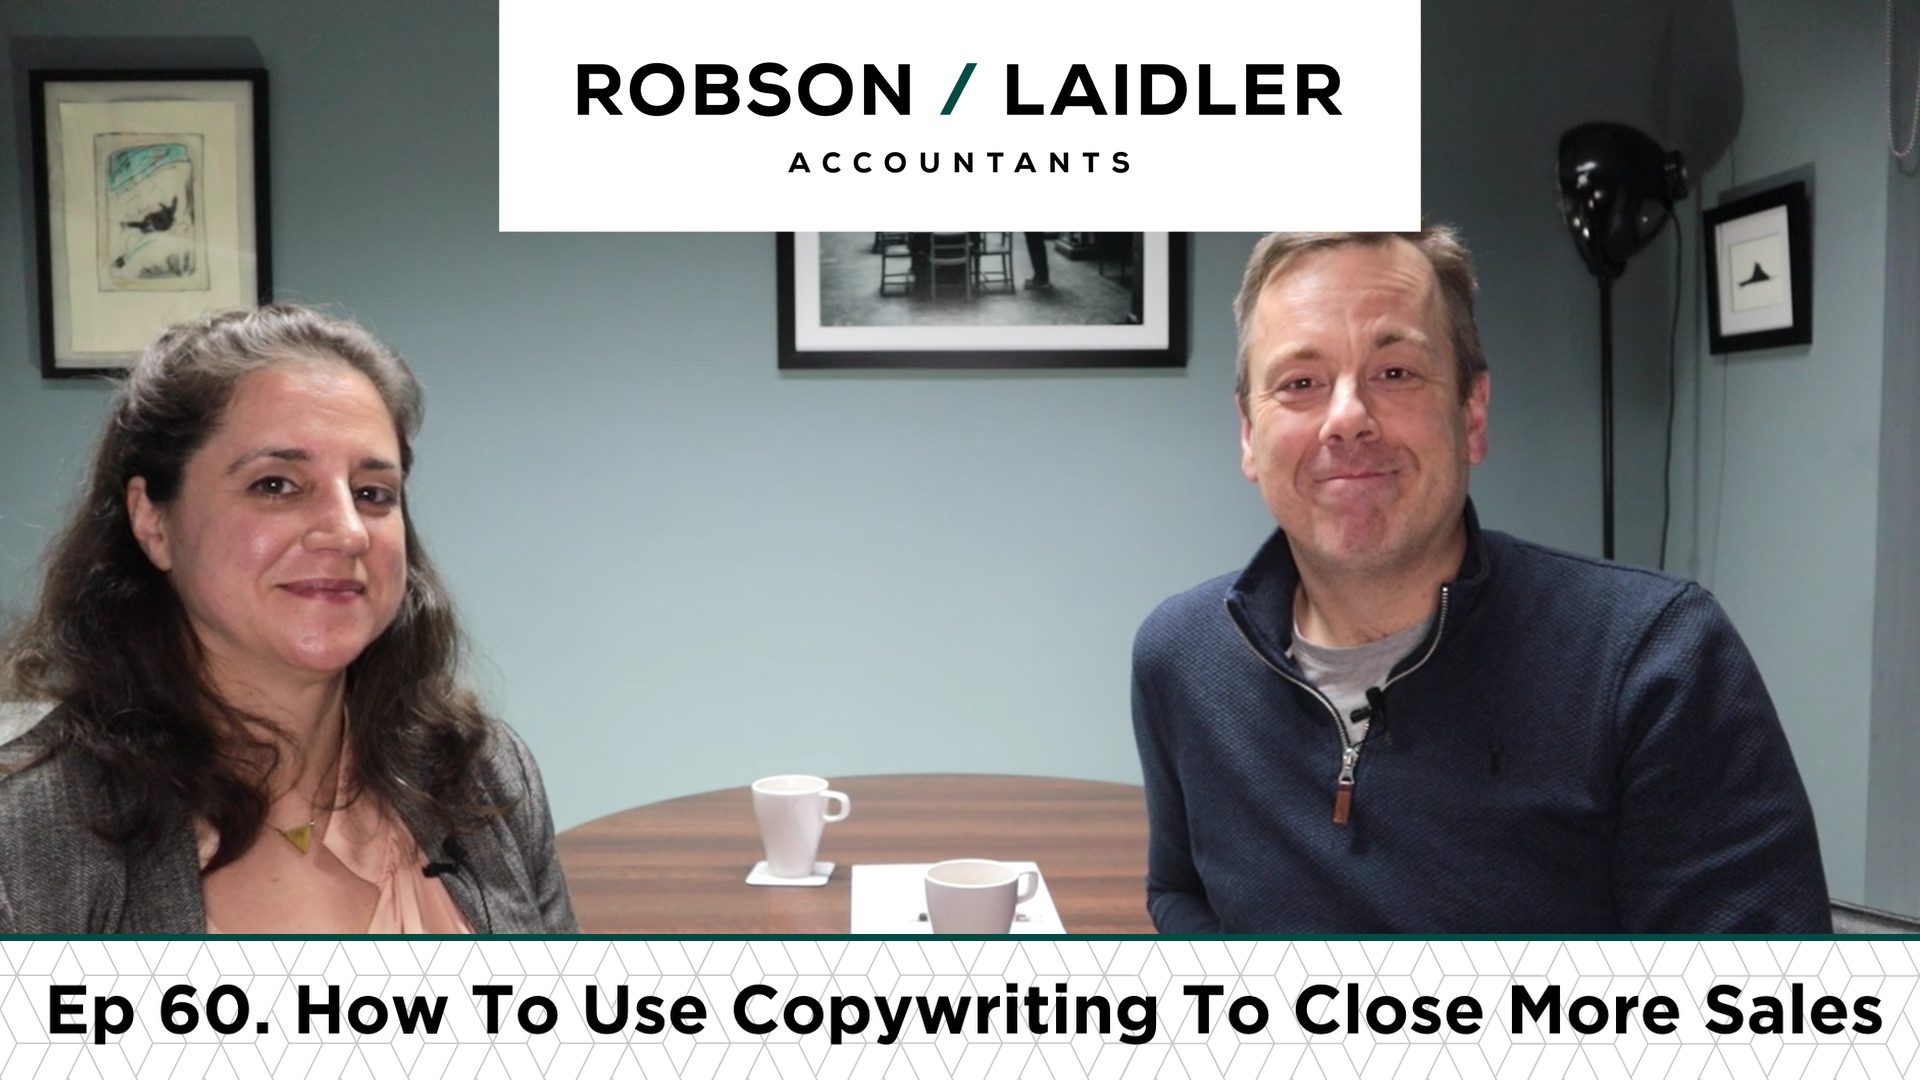 Use copywriting to close more sales podcast